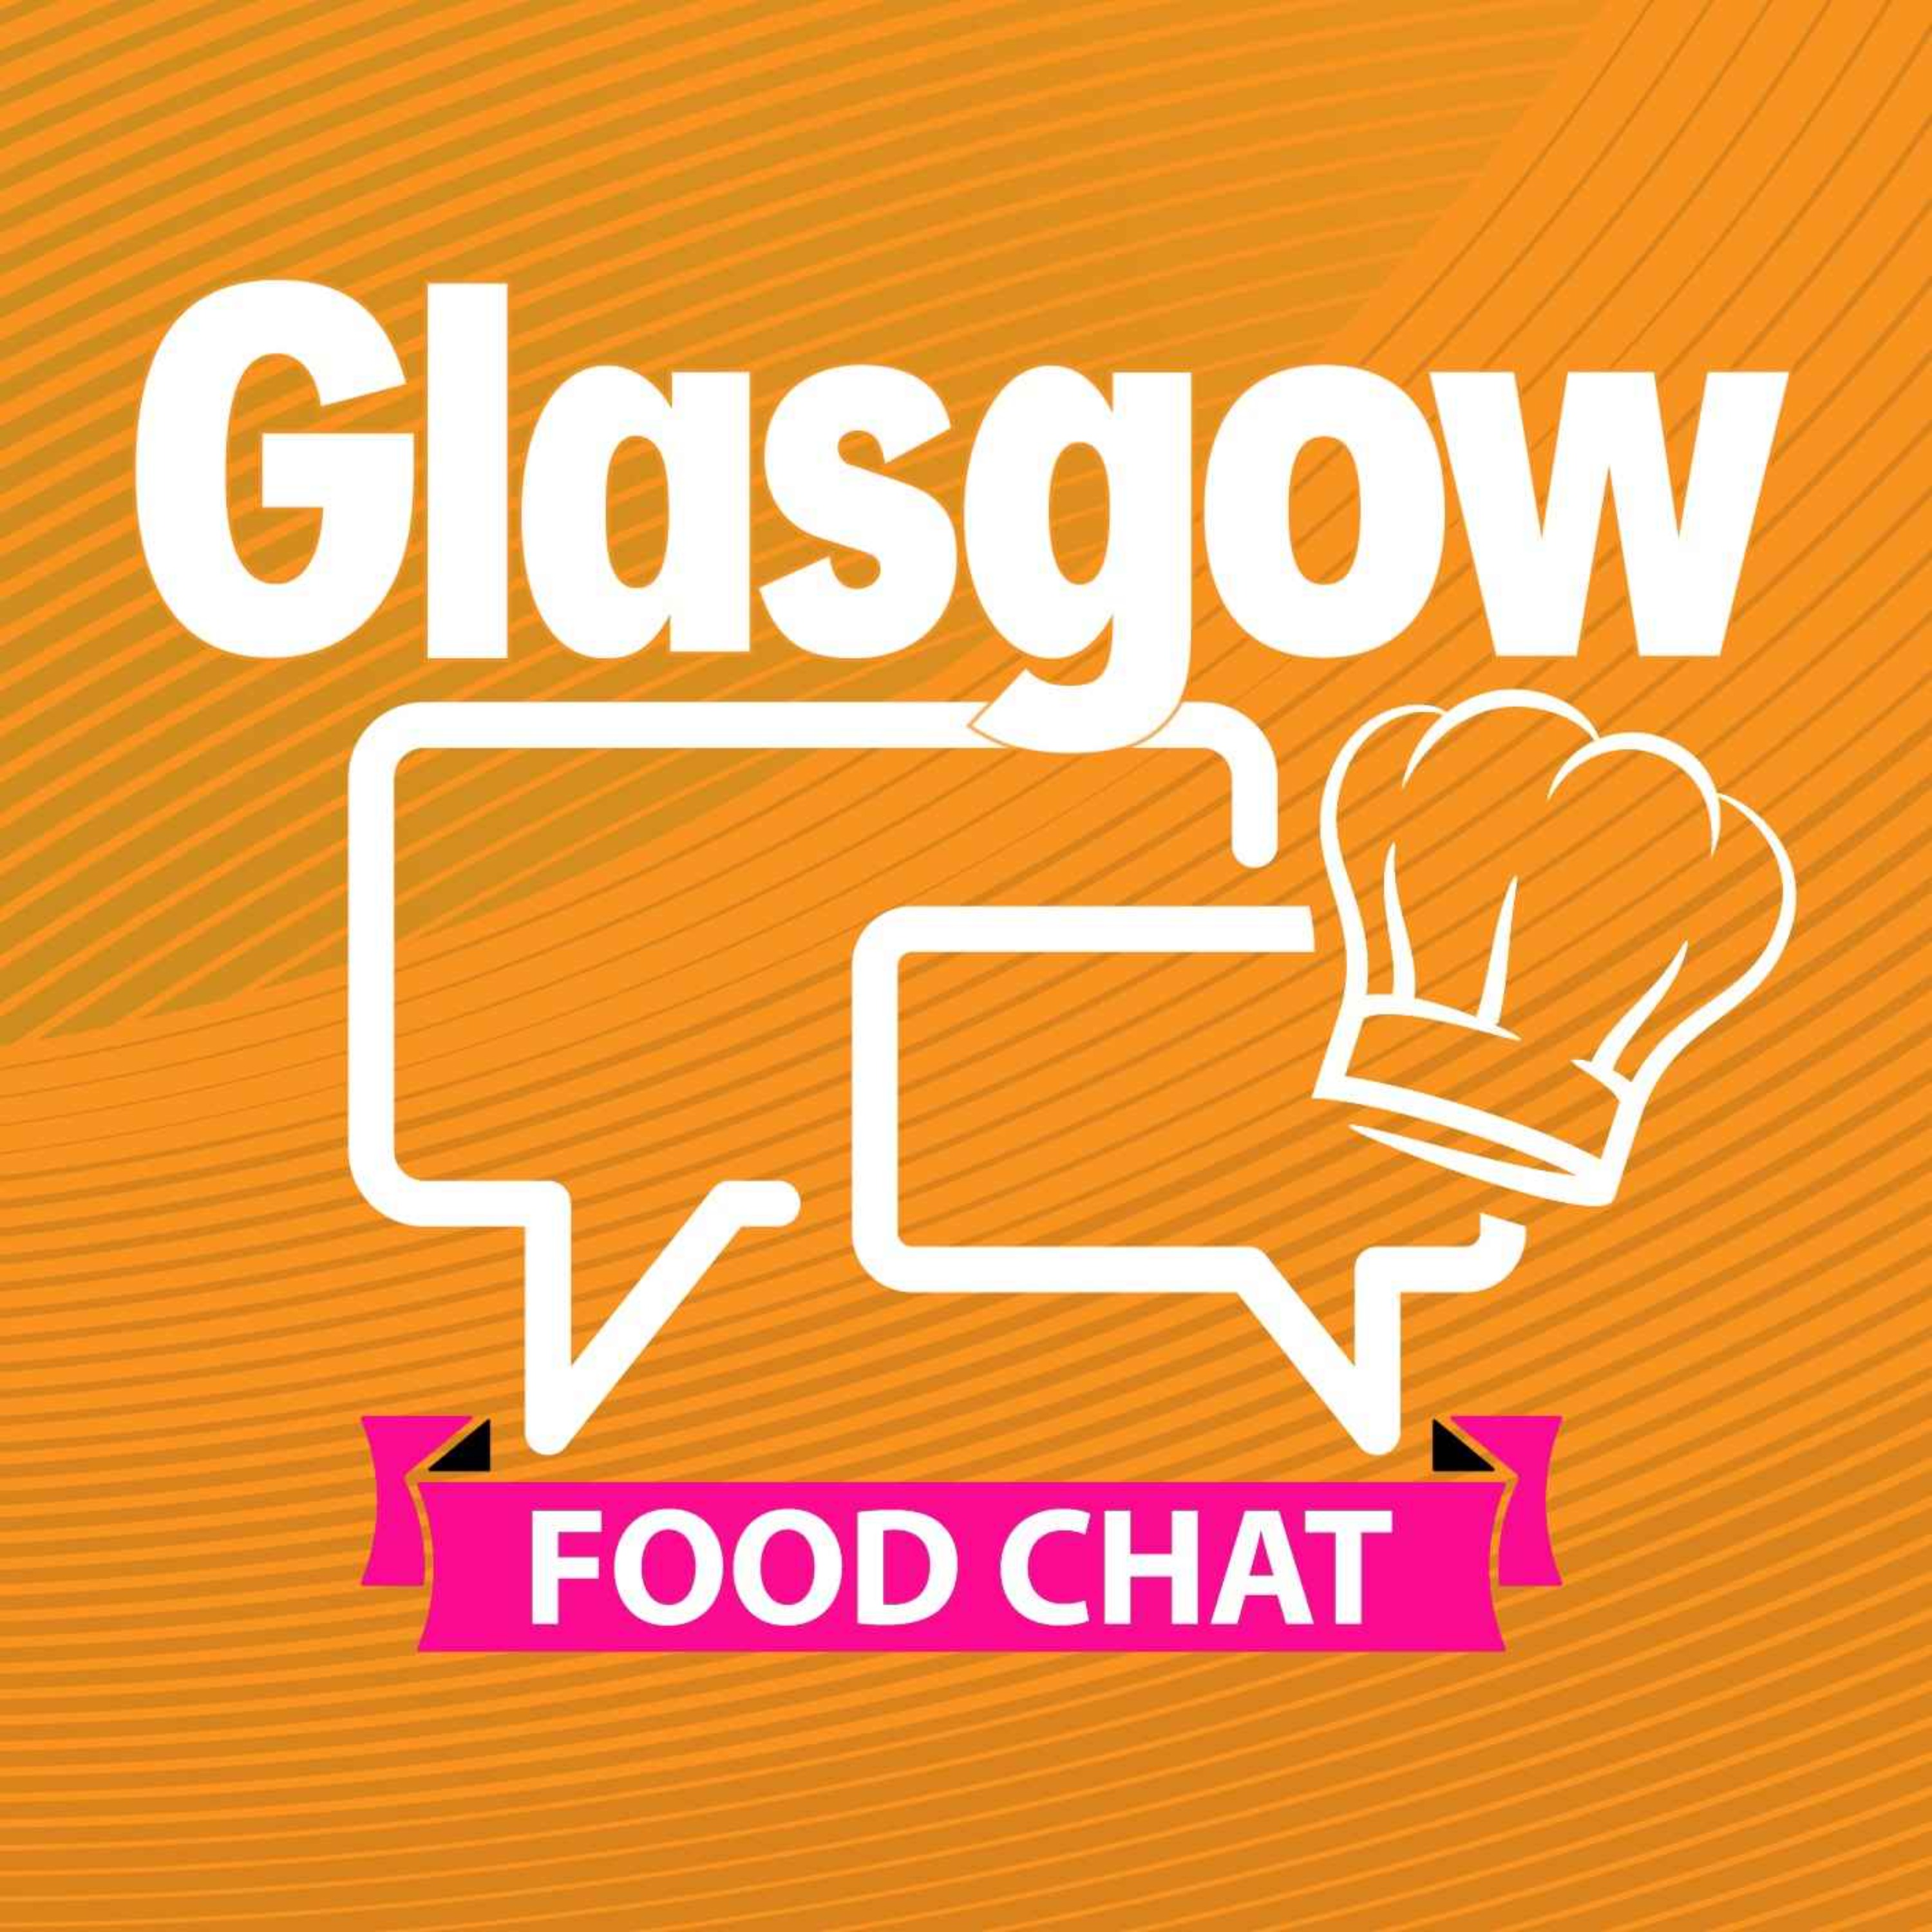 Glasgow Food Chat